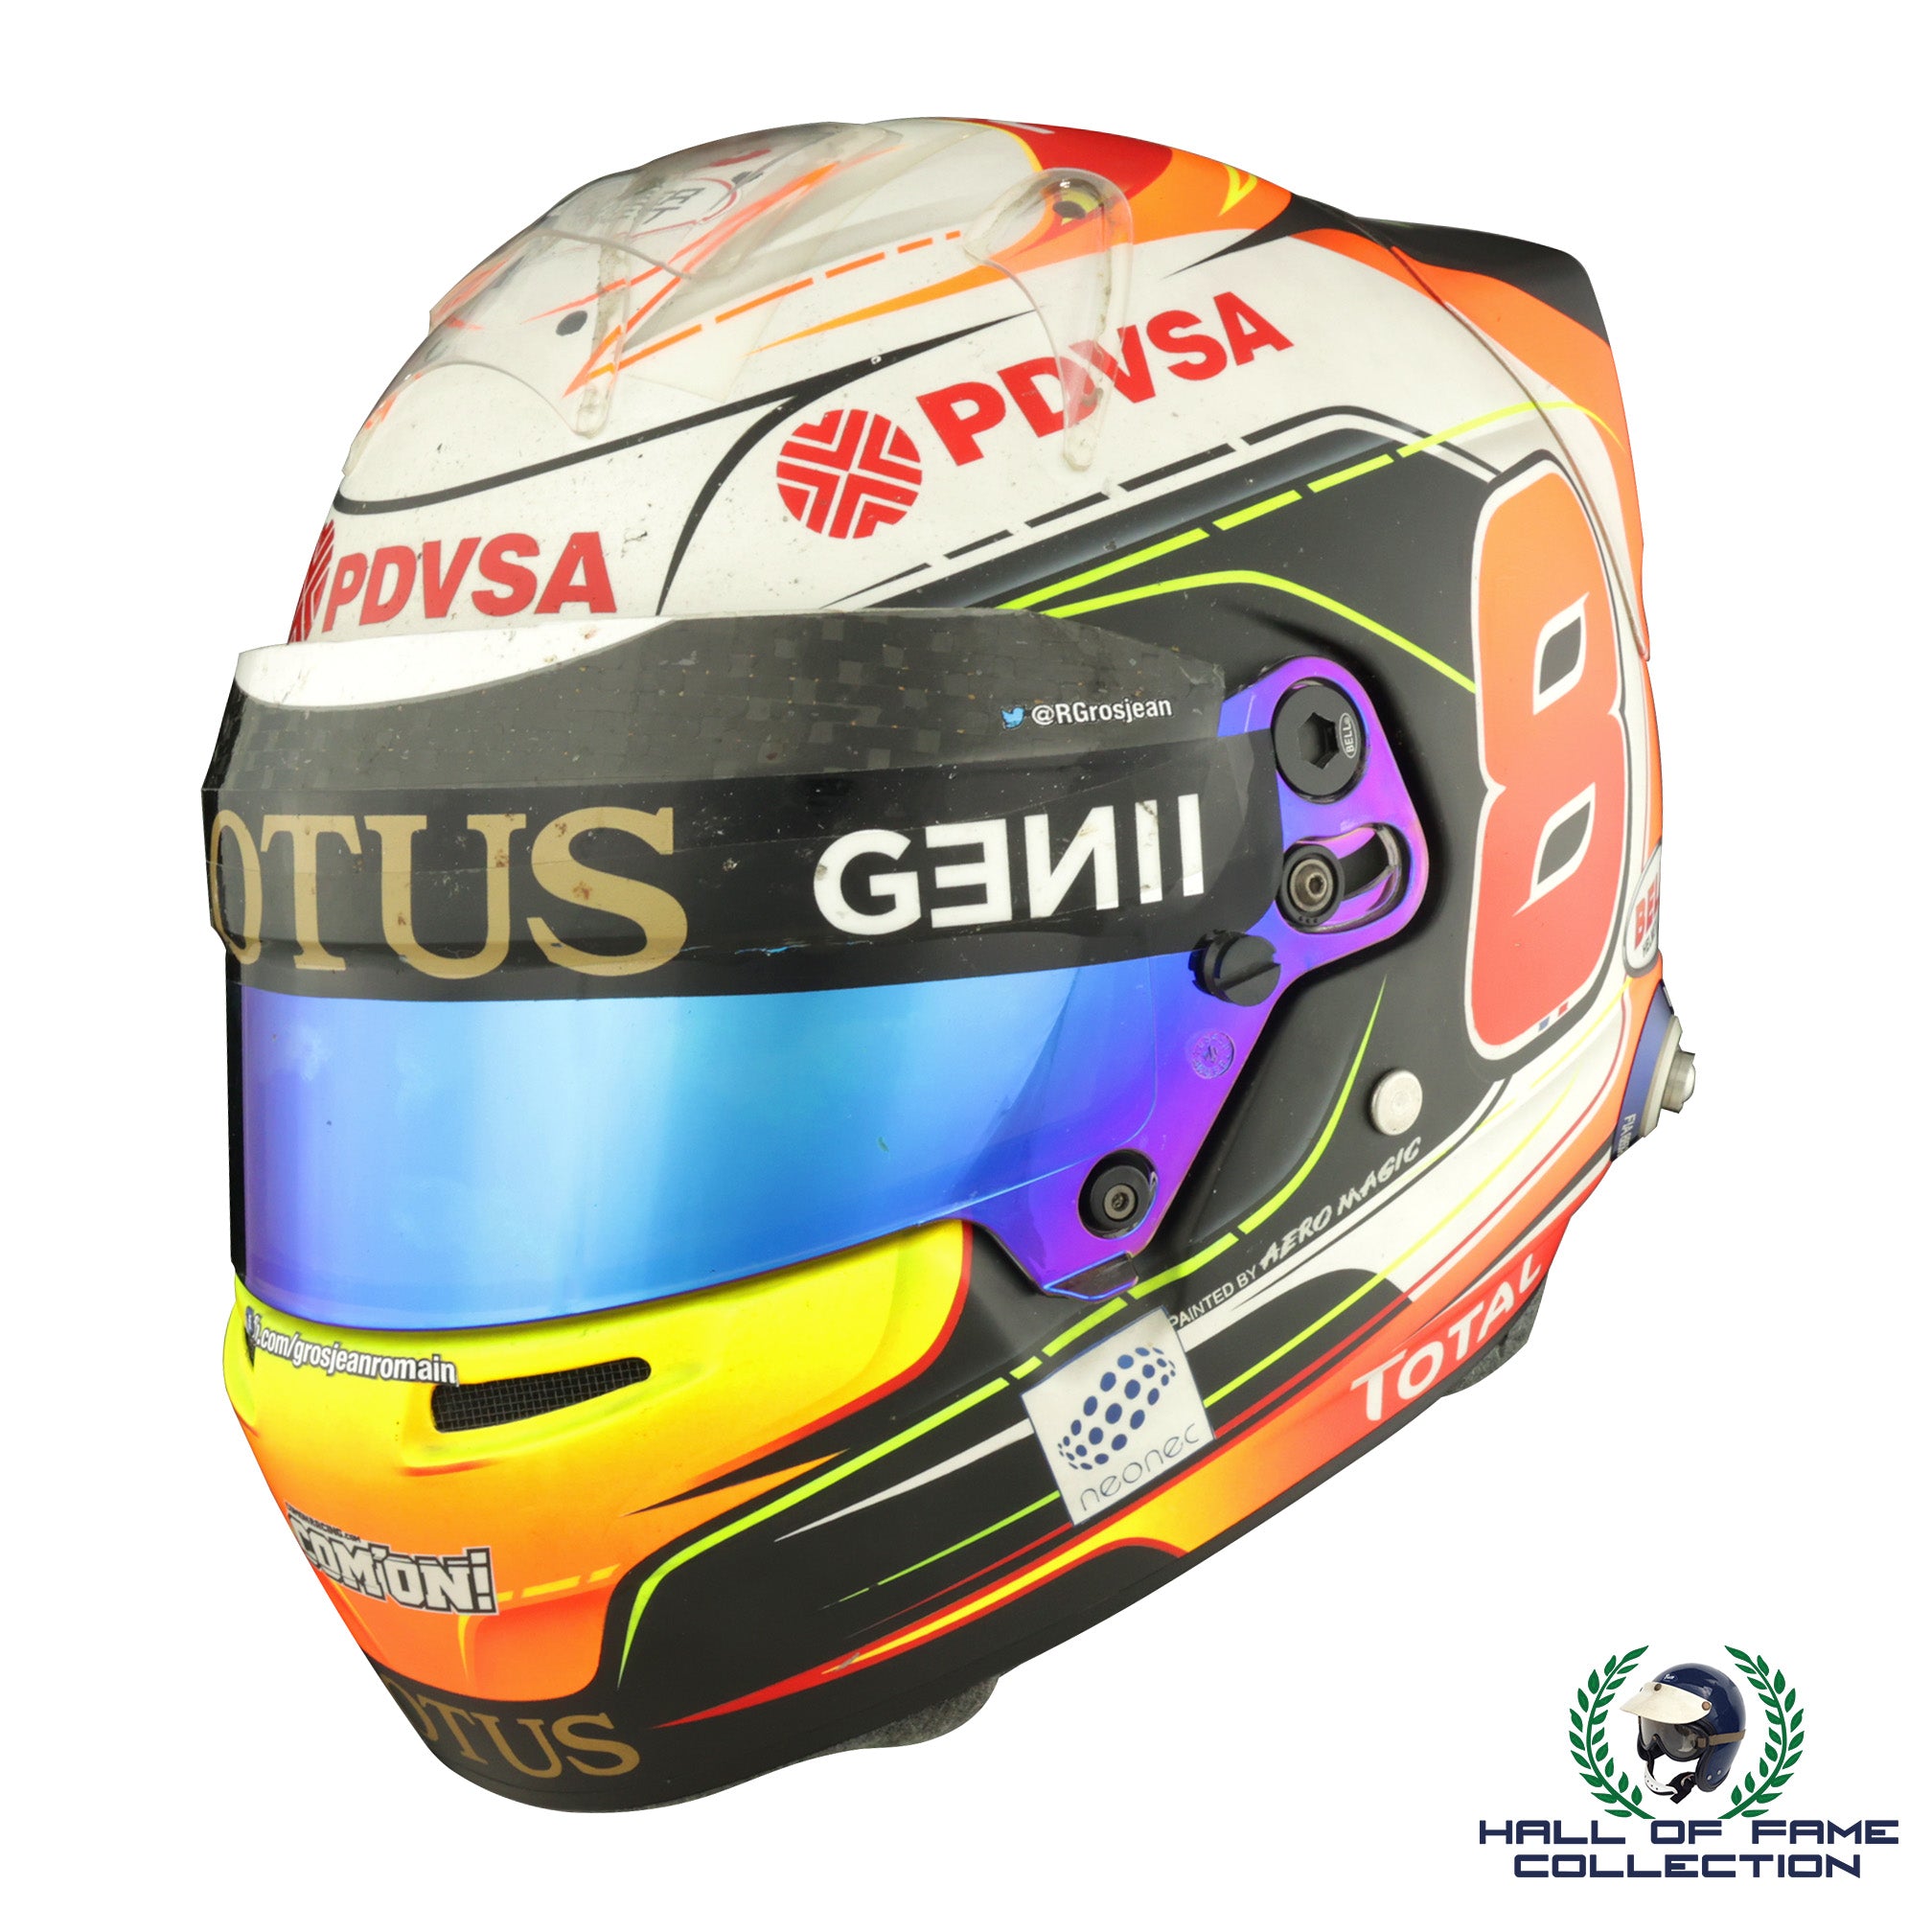 2015 Romain Grosjean Race Used Lotus F1 Helmet